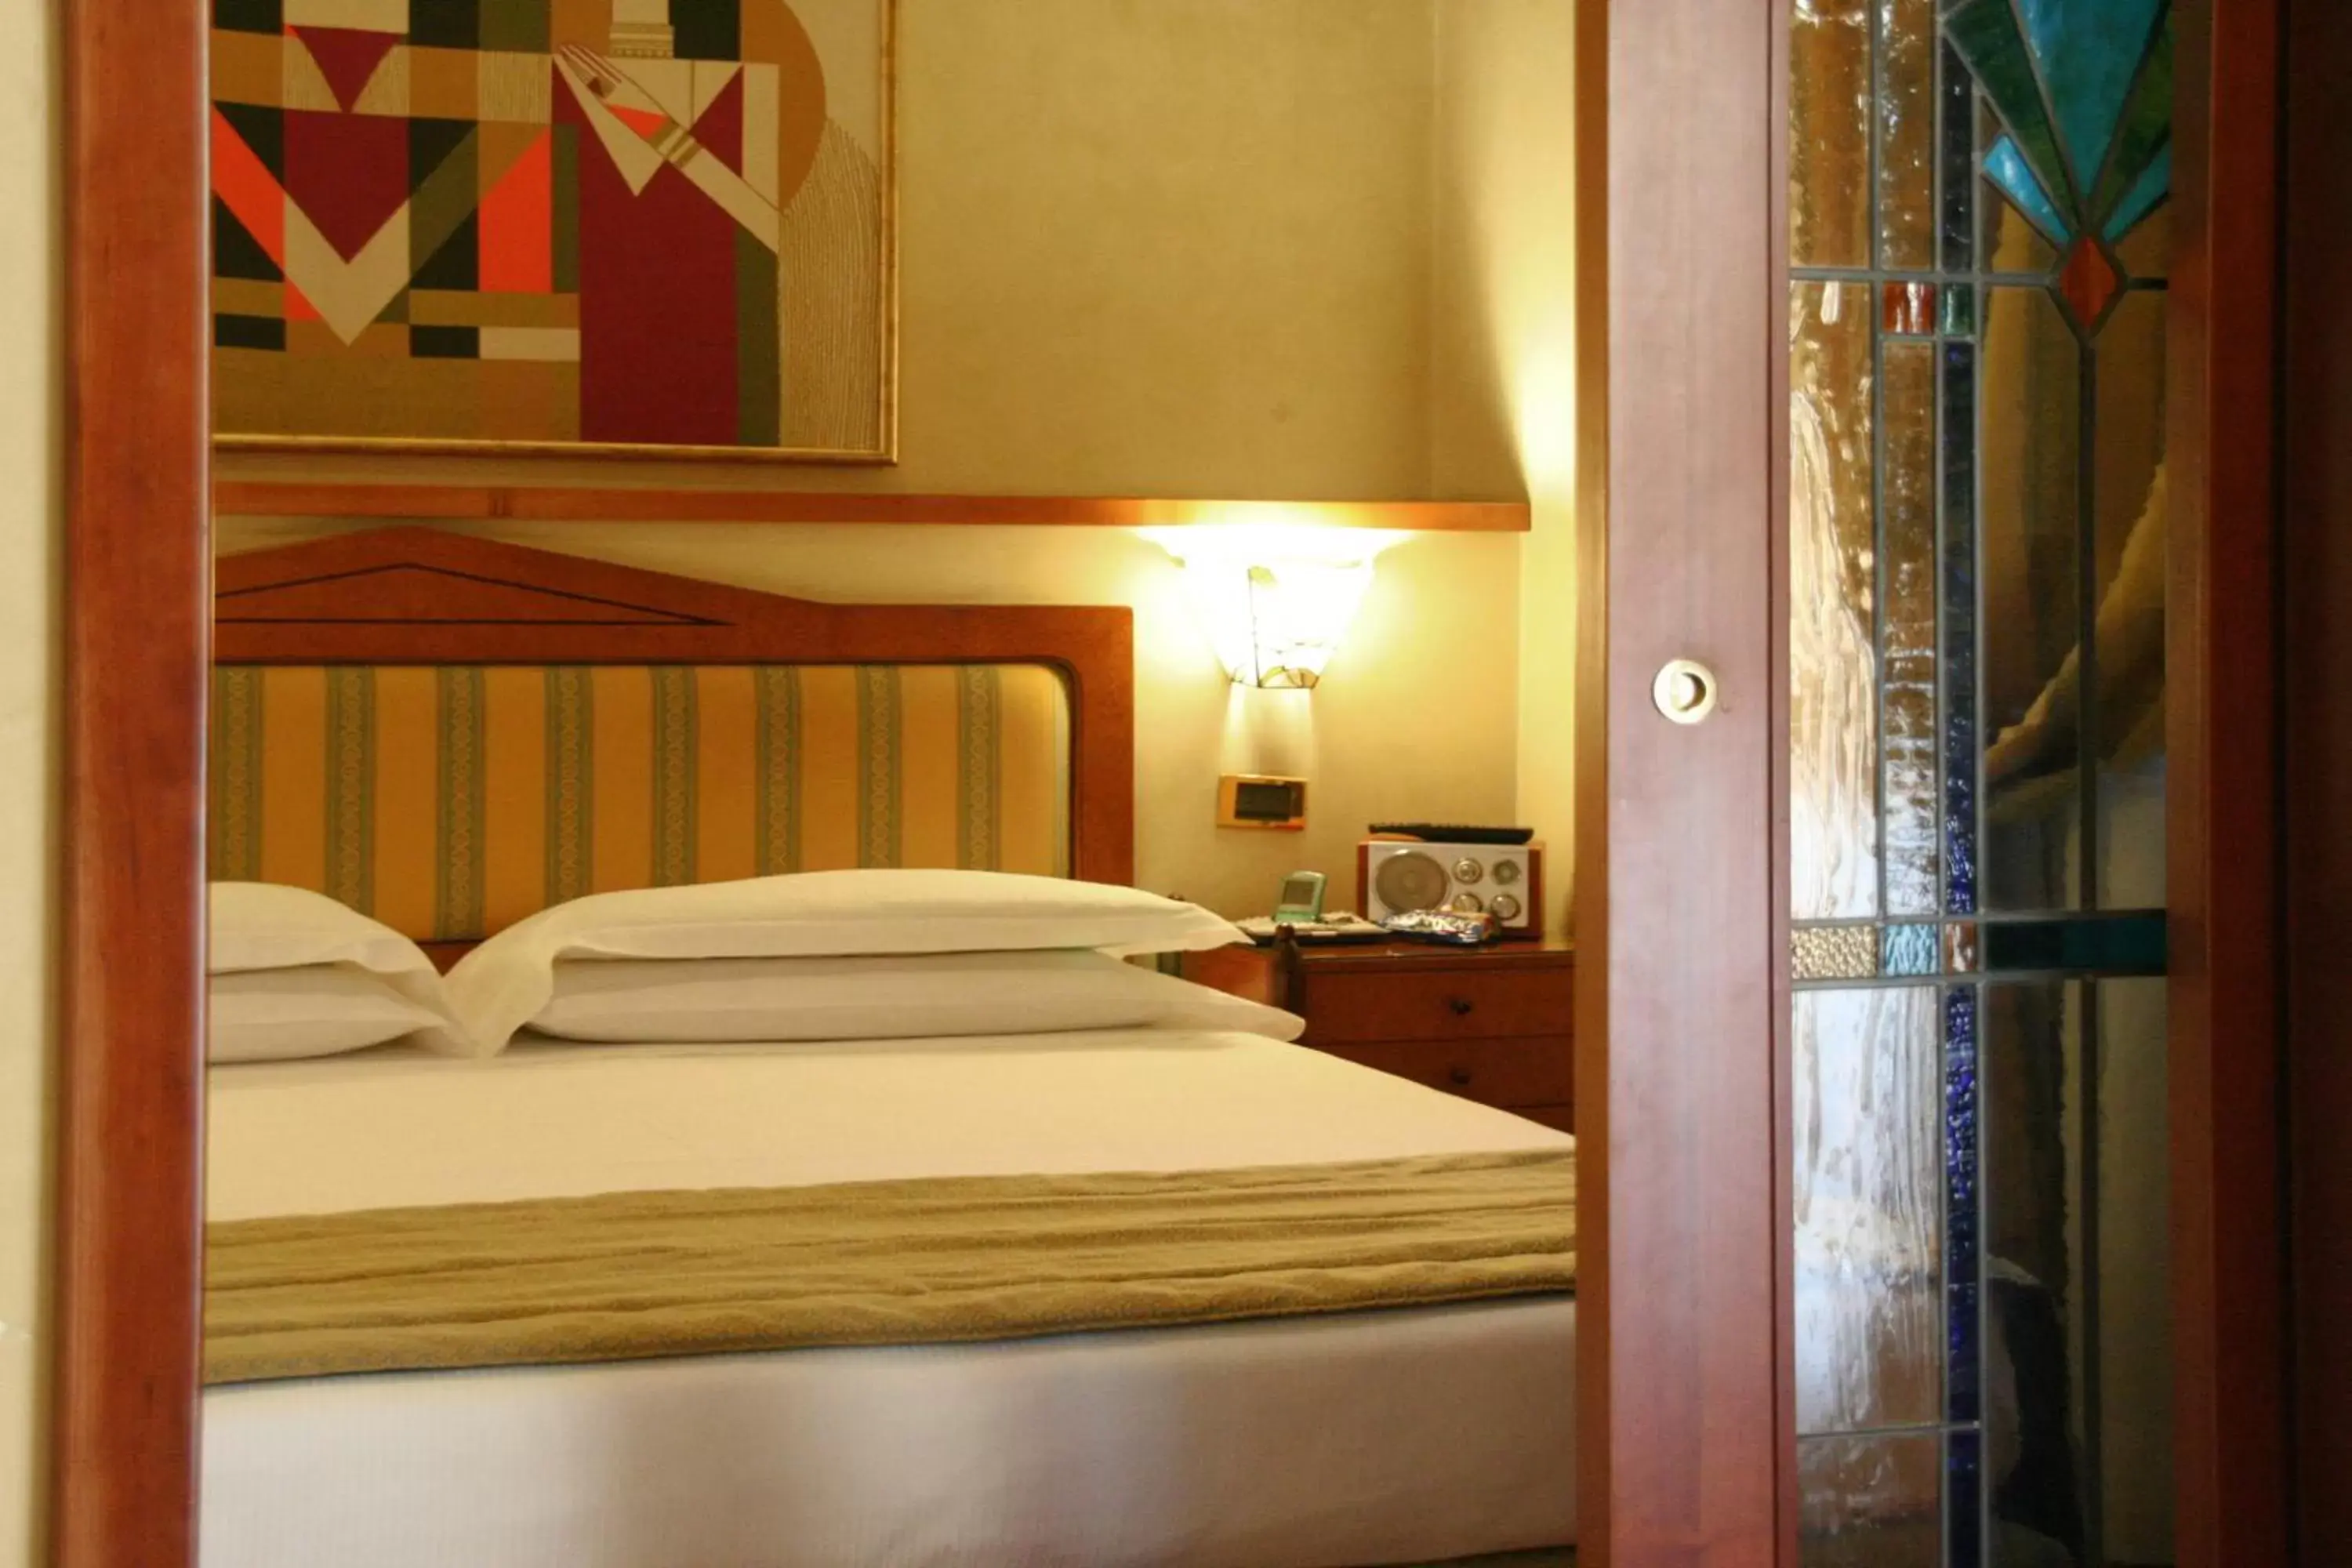 Bed, Room Photo in Best Western Hotel Artdeco